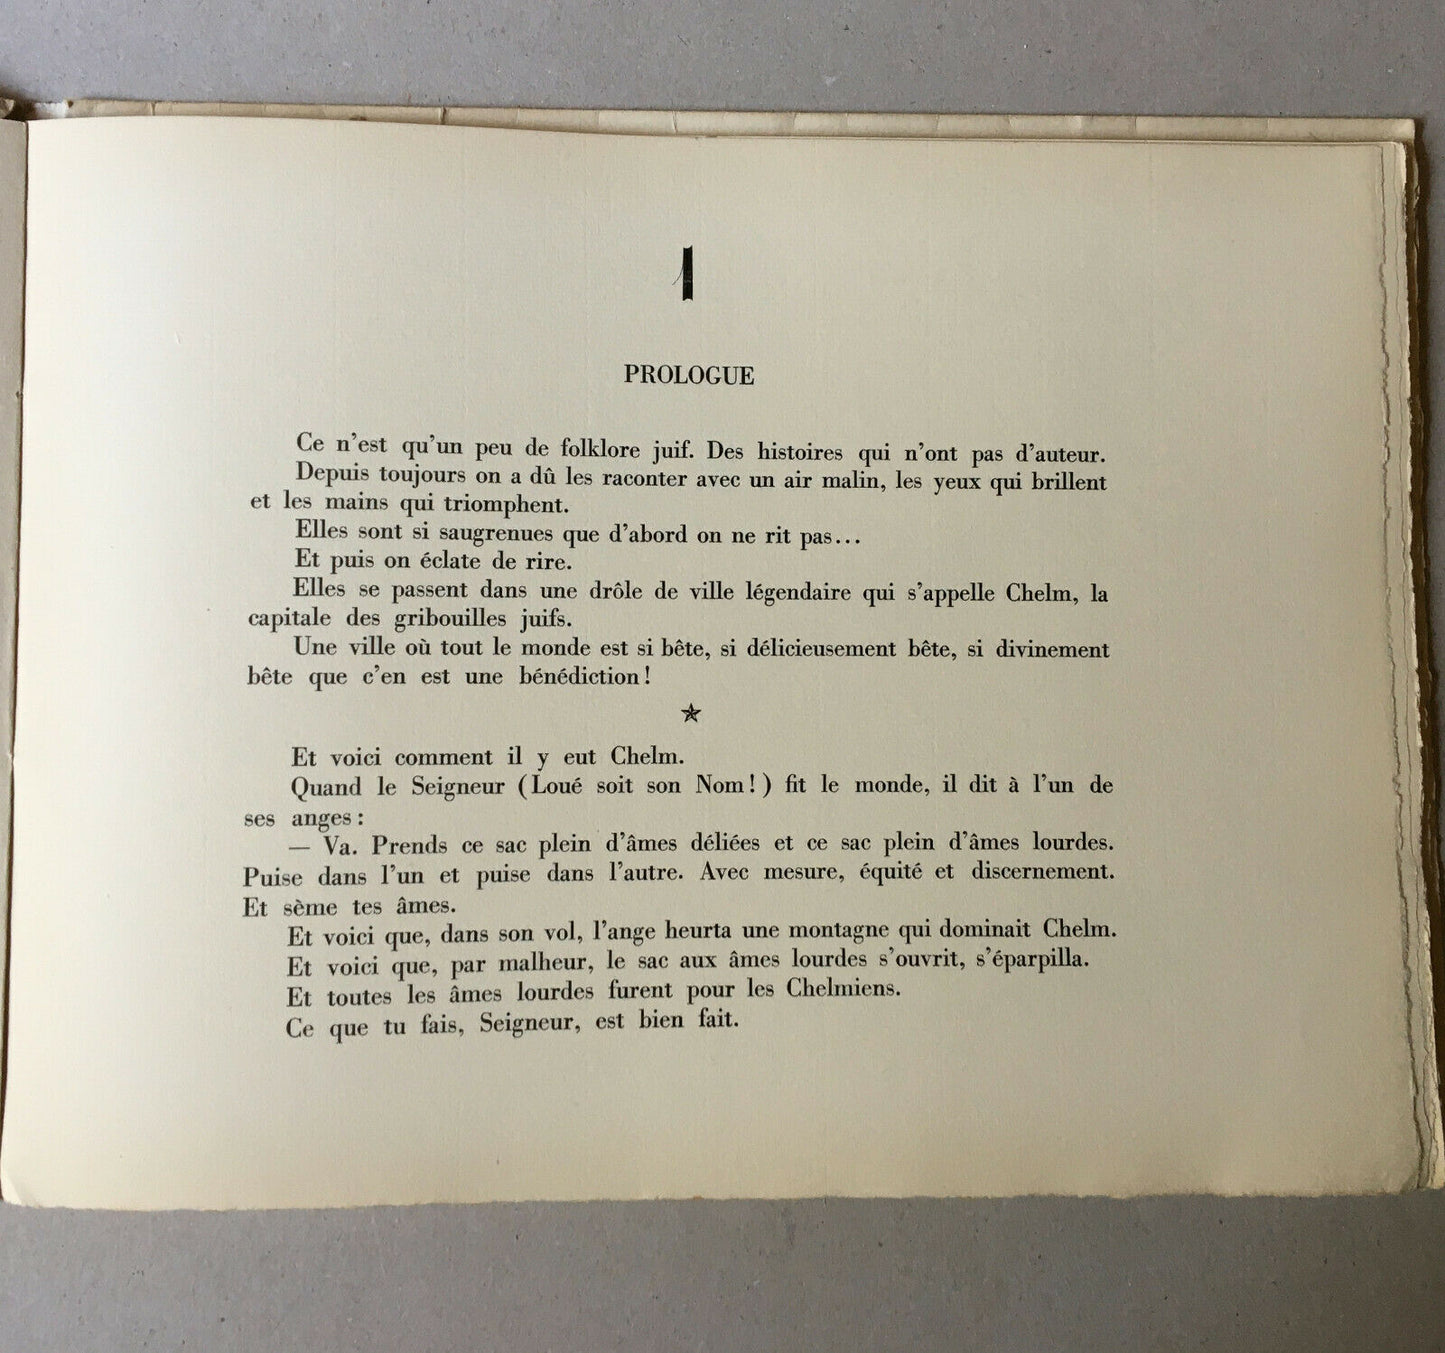 Benn — Twelve short Jewish tales on a funny theme — É.O. N°/124 — Worms — 1936